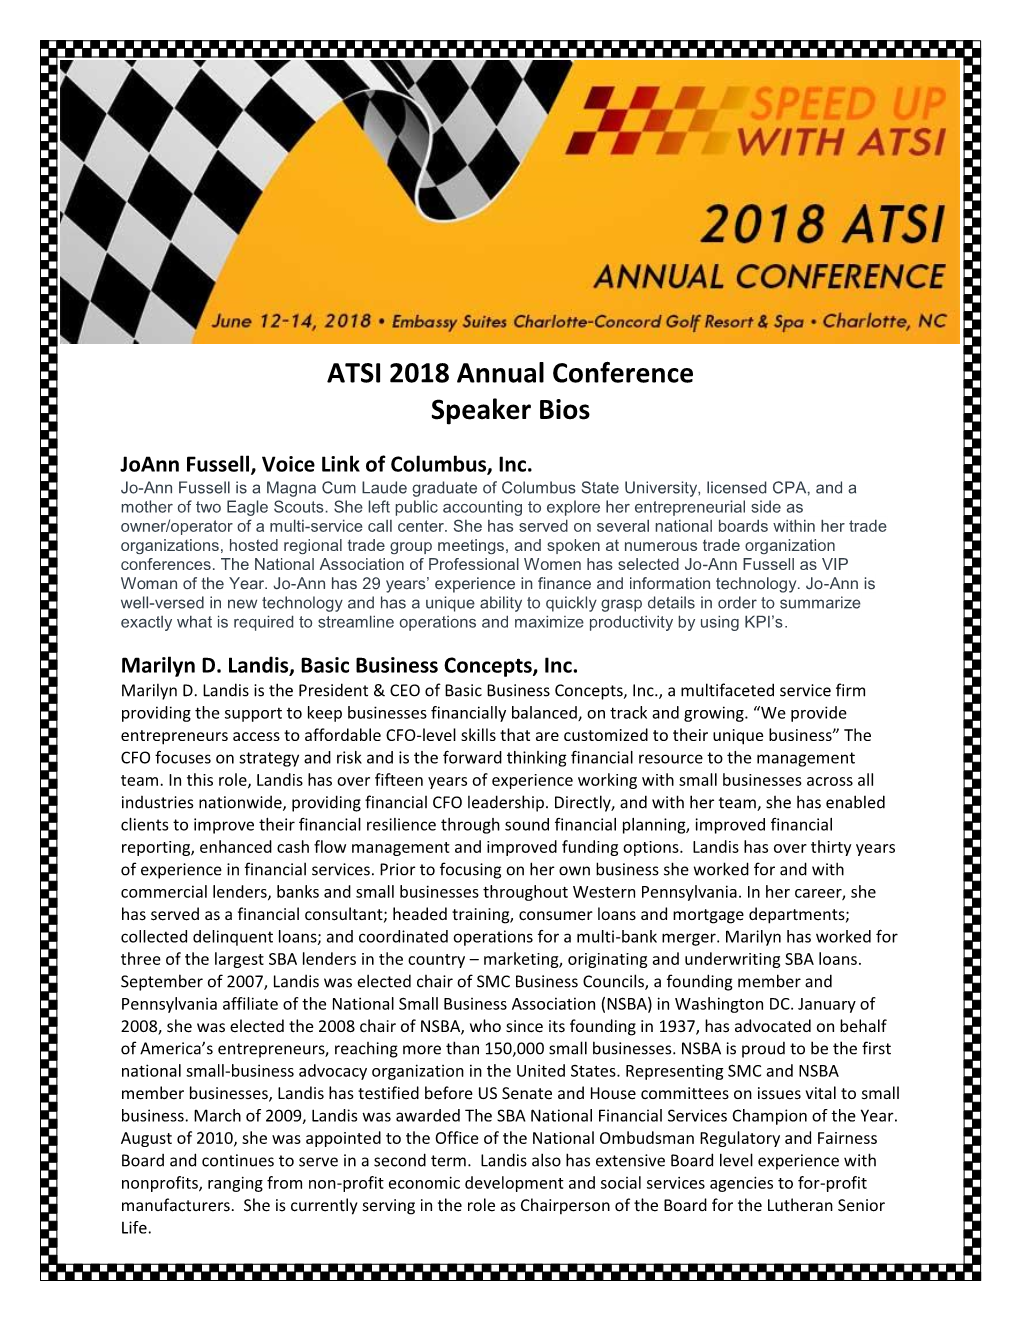 ATSI 2018 Annual Conference Speaker Bios